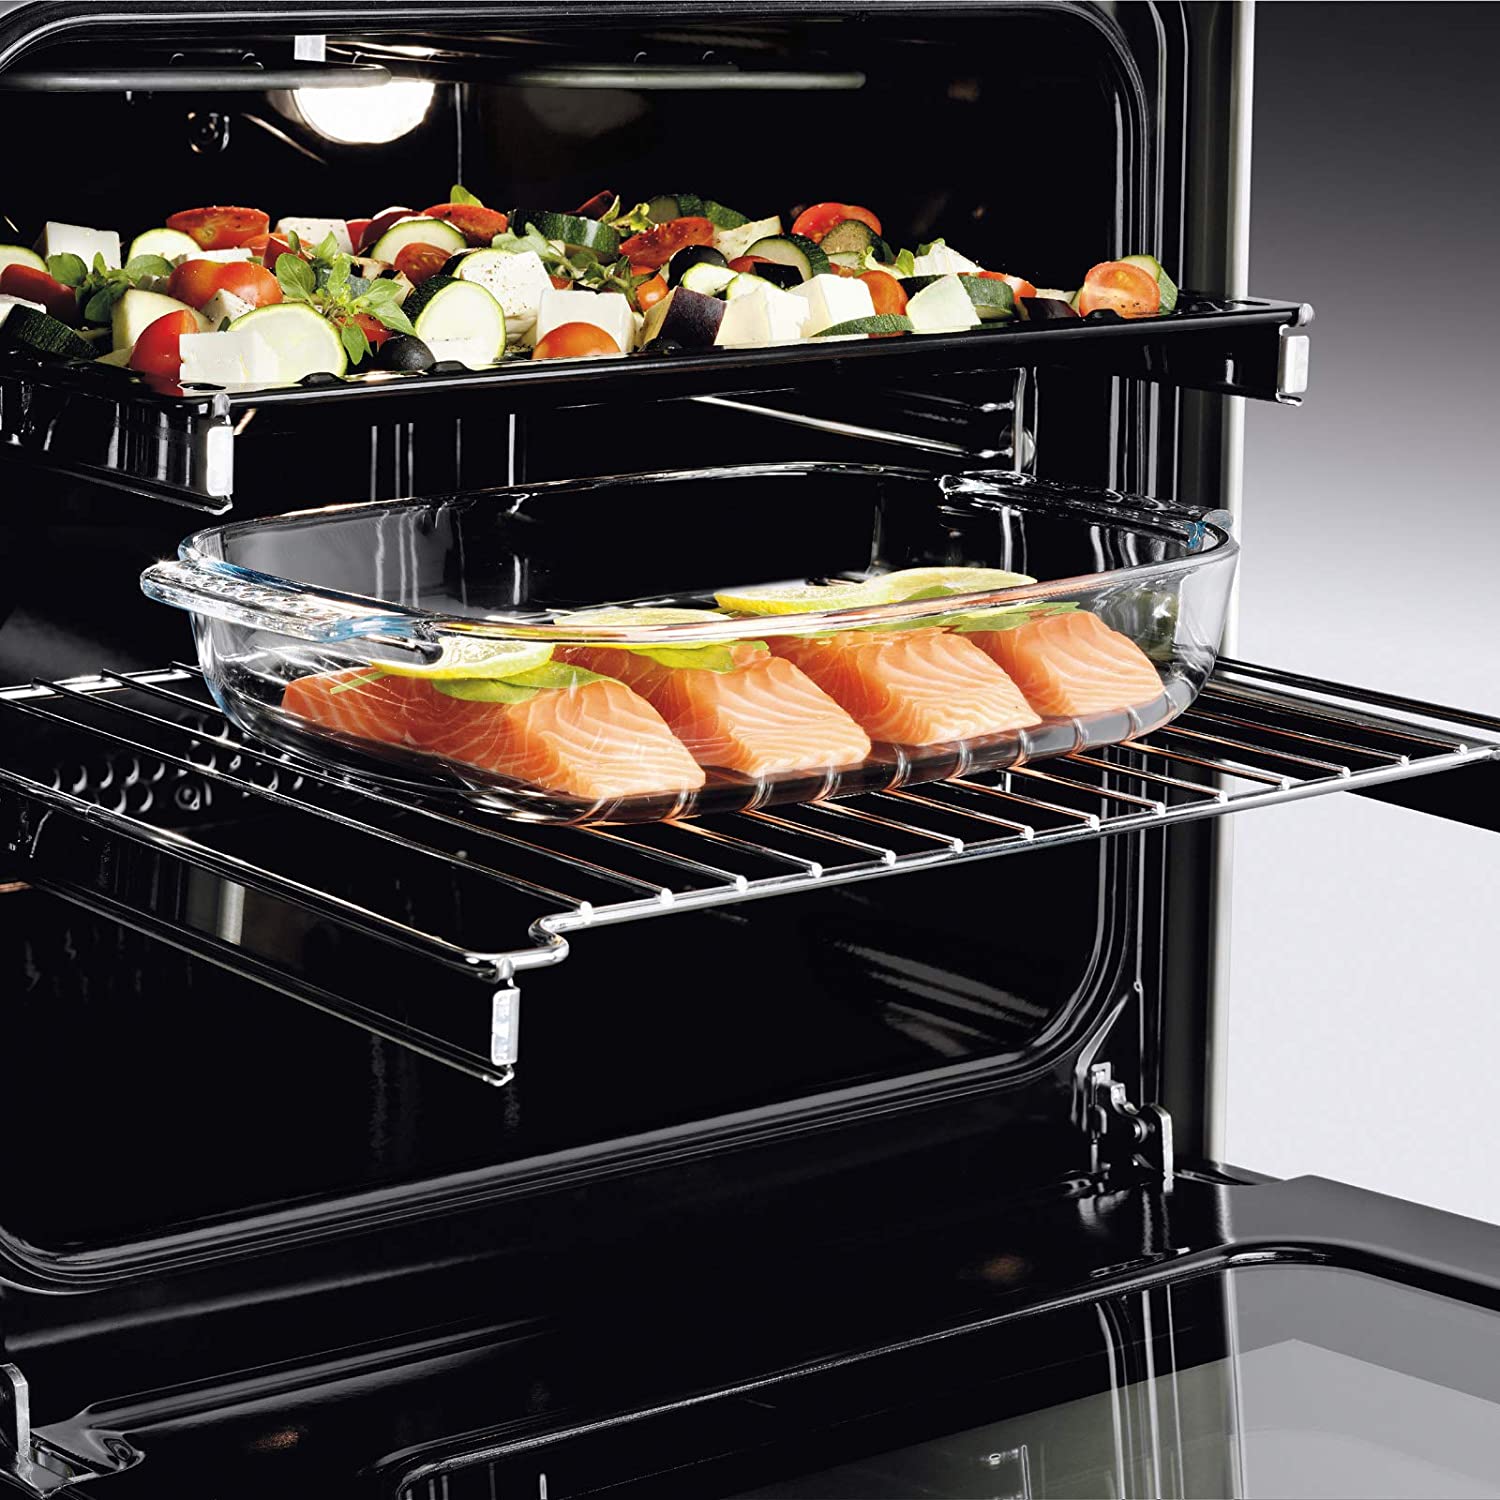 Electrolux 60X60cm Gas Cooker | Kitchen Appliance | Best Gas Burner in Bahrain | Halabh.com